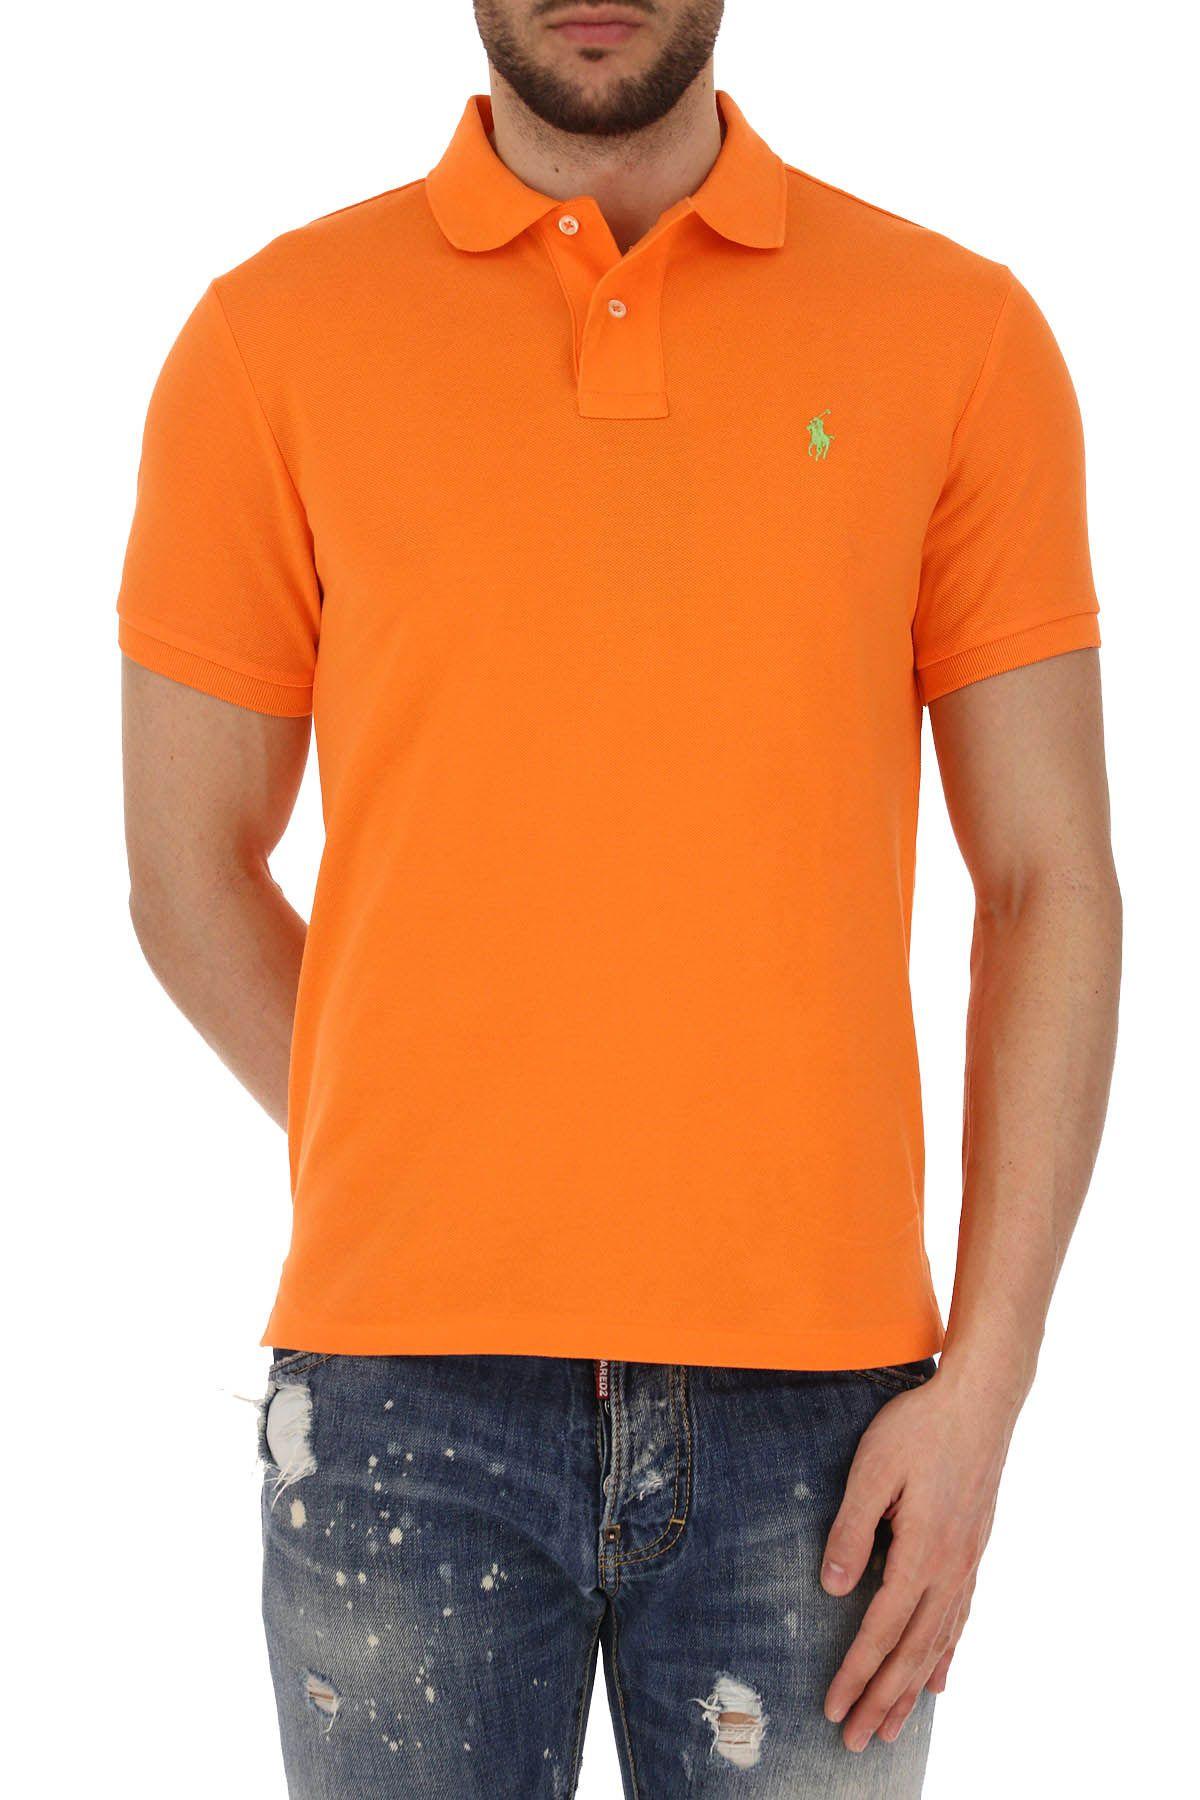 Ralph Lauren Orange Cotton Polo Shirt in Orange for Men - Lyst